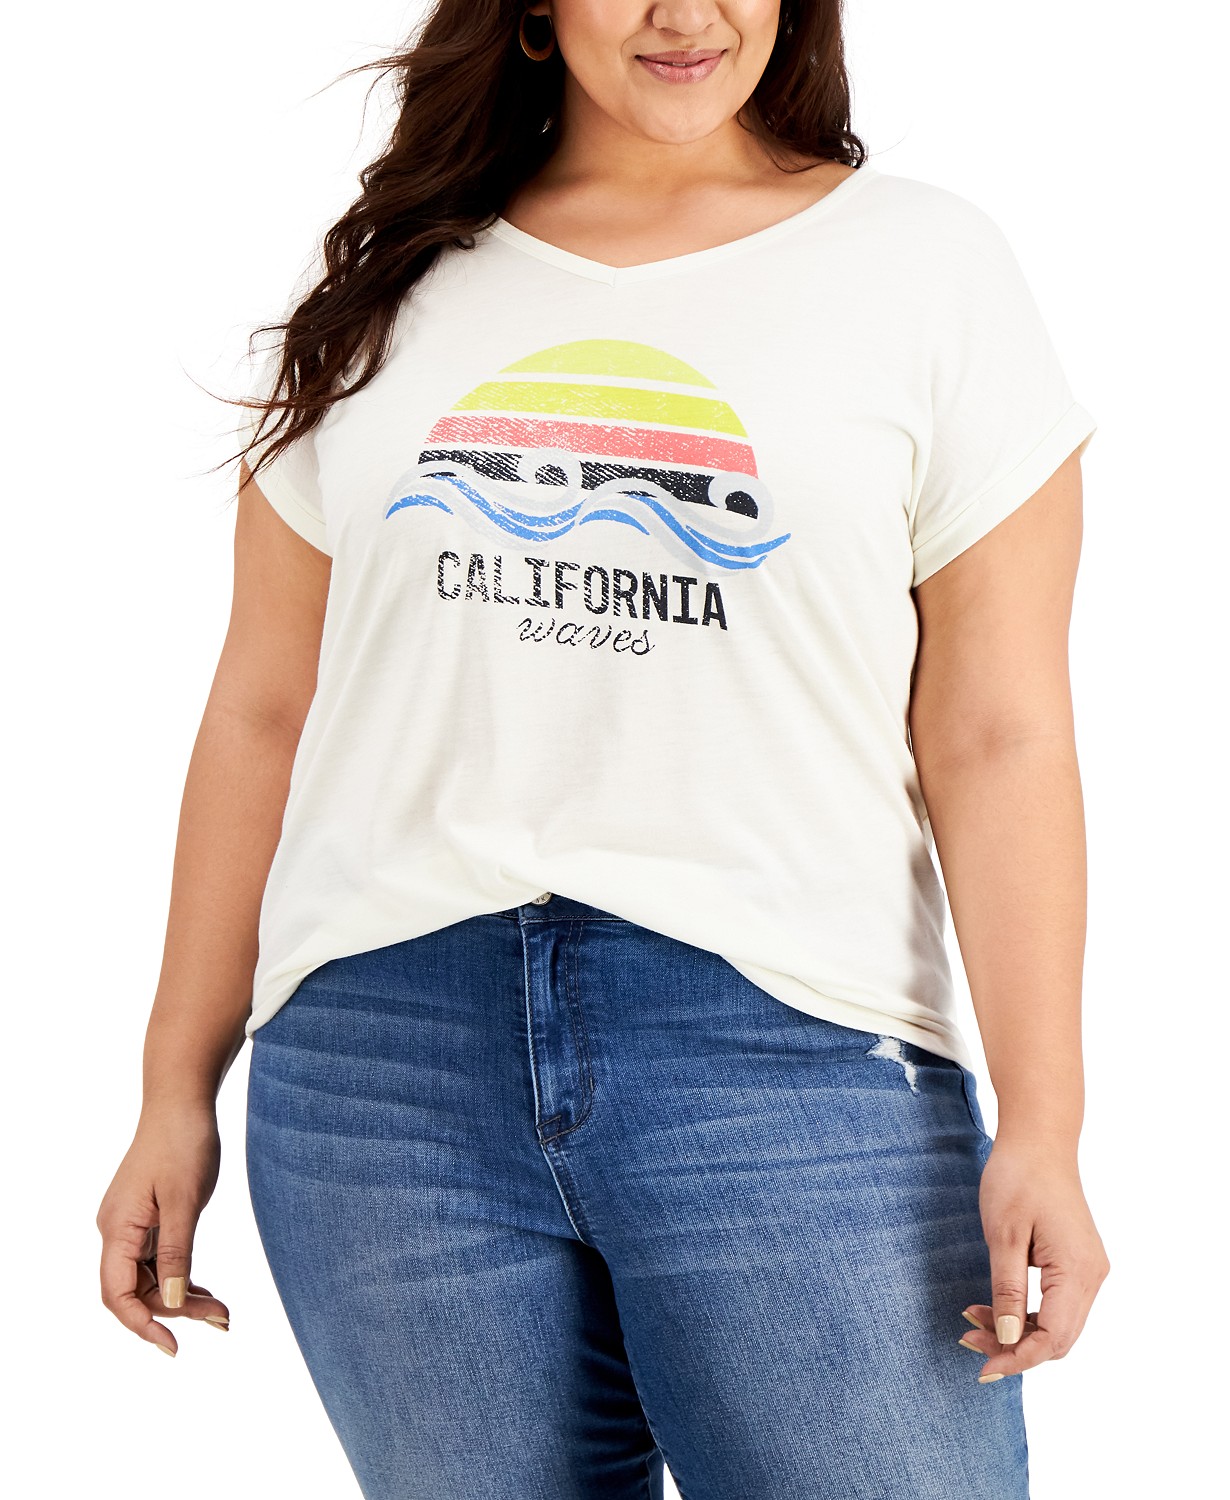 Women's Plus Size Tops: Desert Print T-Shirt $5.25, California Print T-Shirt $5.25 & More + 6% Slickdeals Cashback (PC Req'd) + Free Store Pickup at Macy's